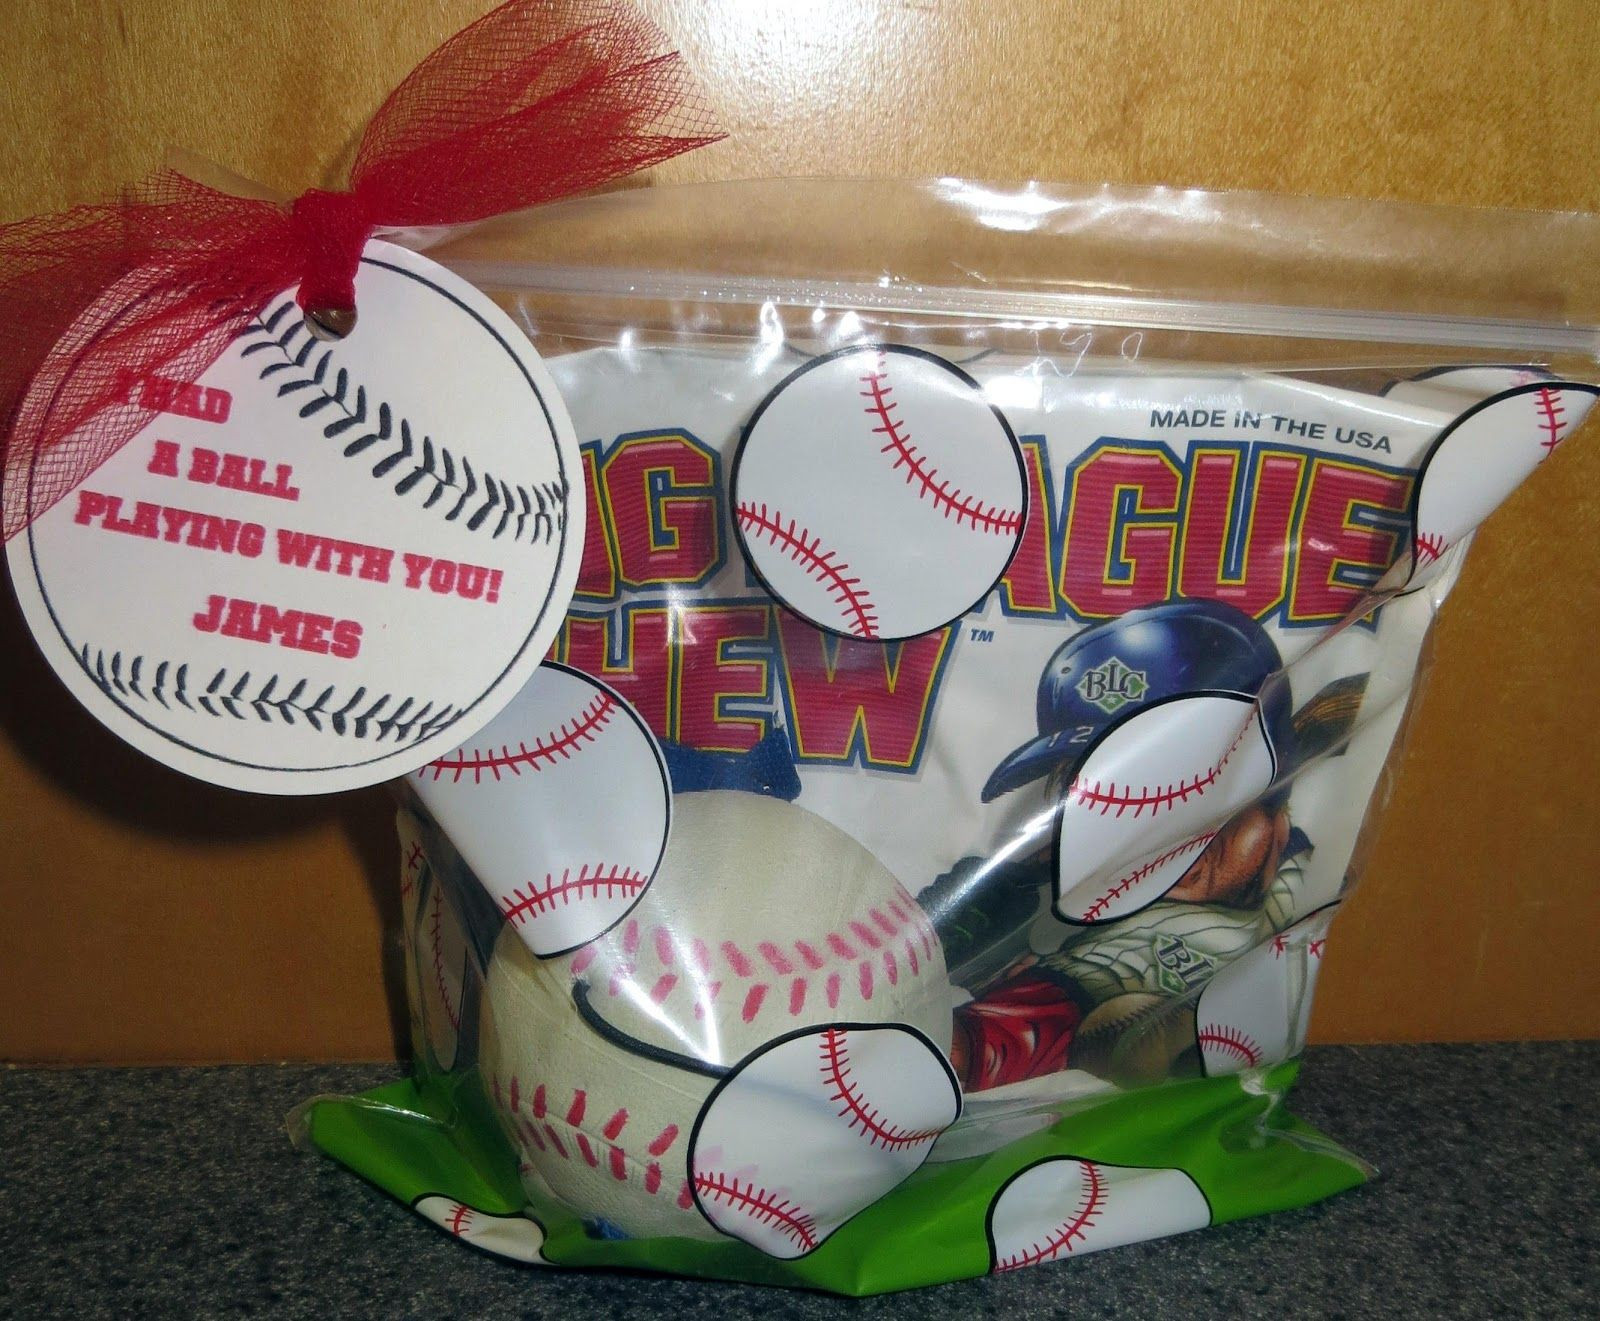 Kids Baseball Gifts
 End of Season Baseball Gifts